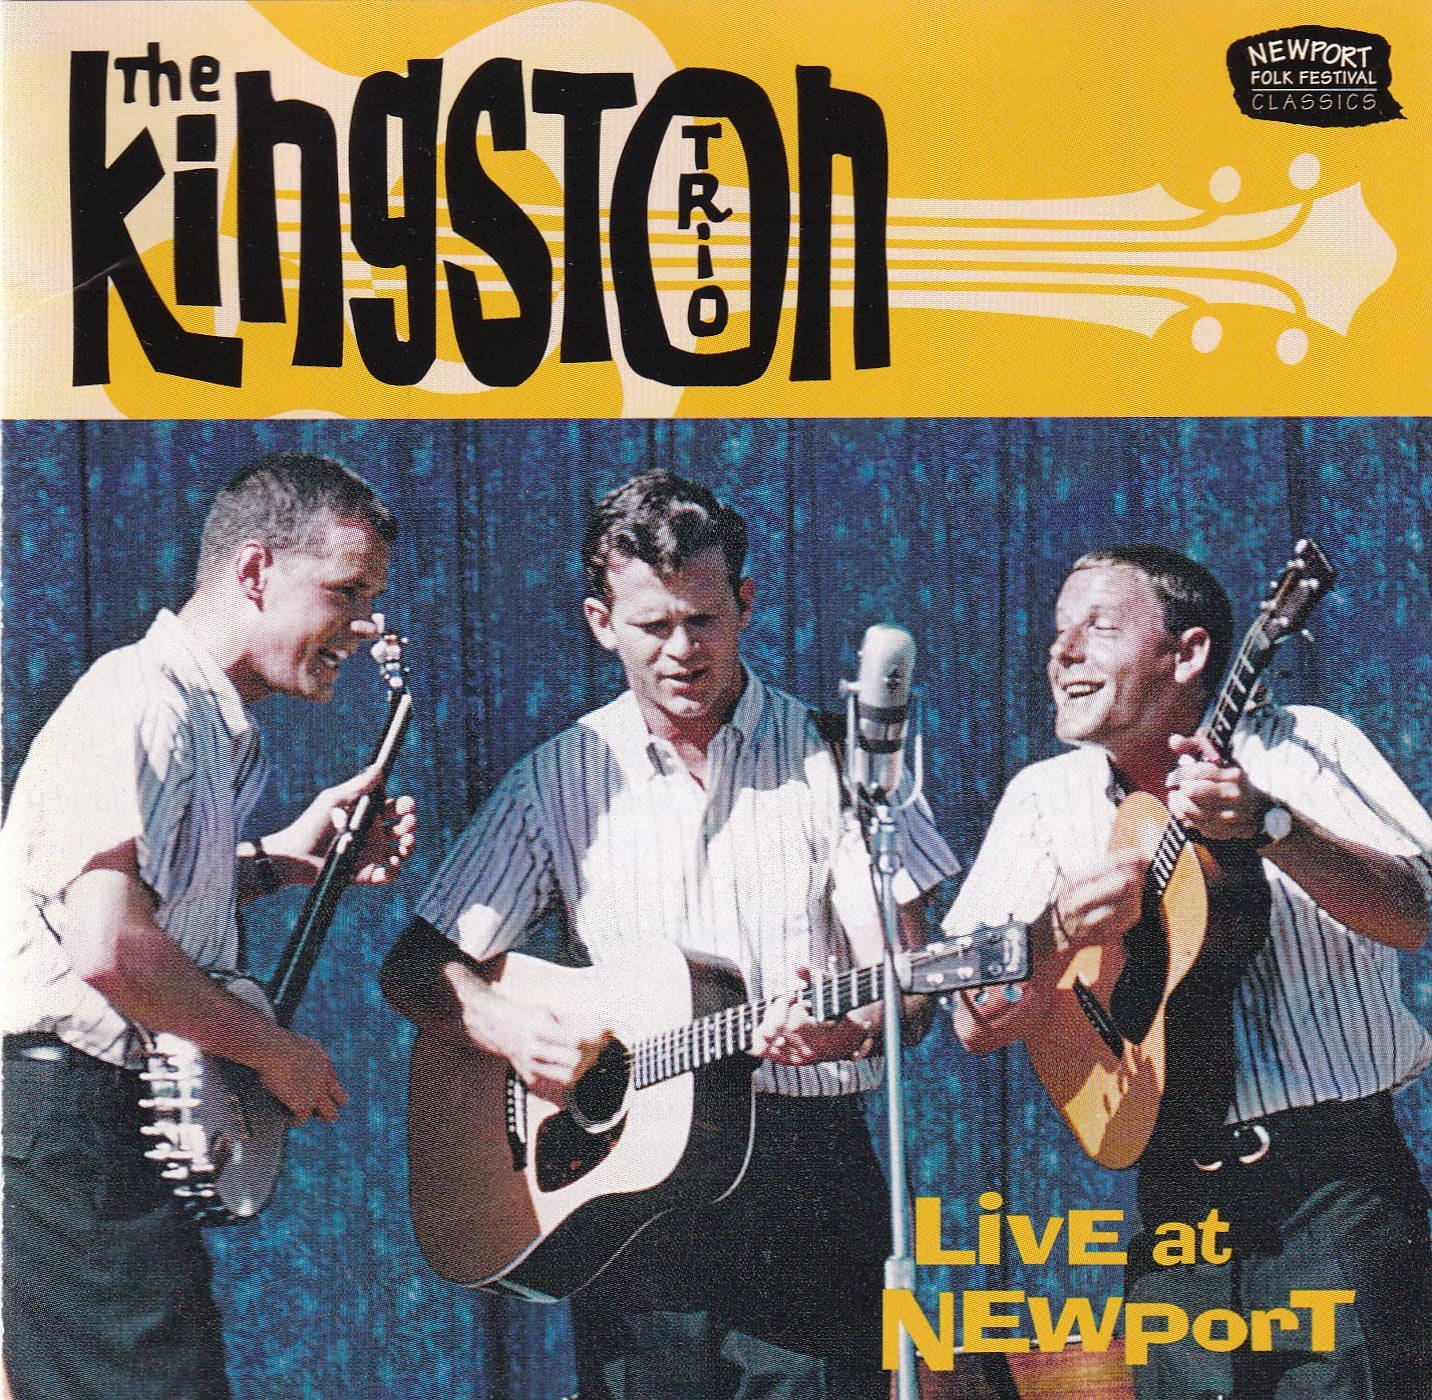 The Kingston Trio Live Performance at Newport Wallpaper